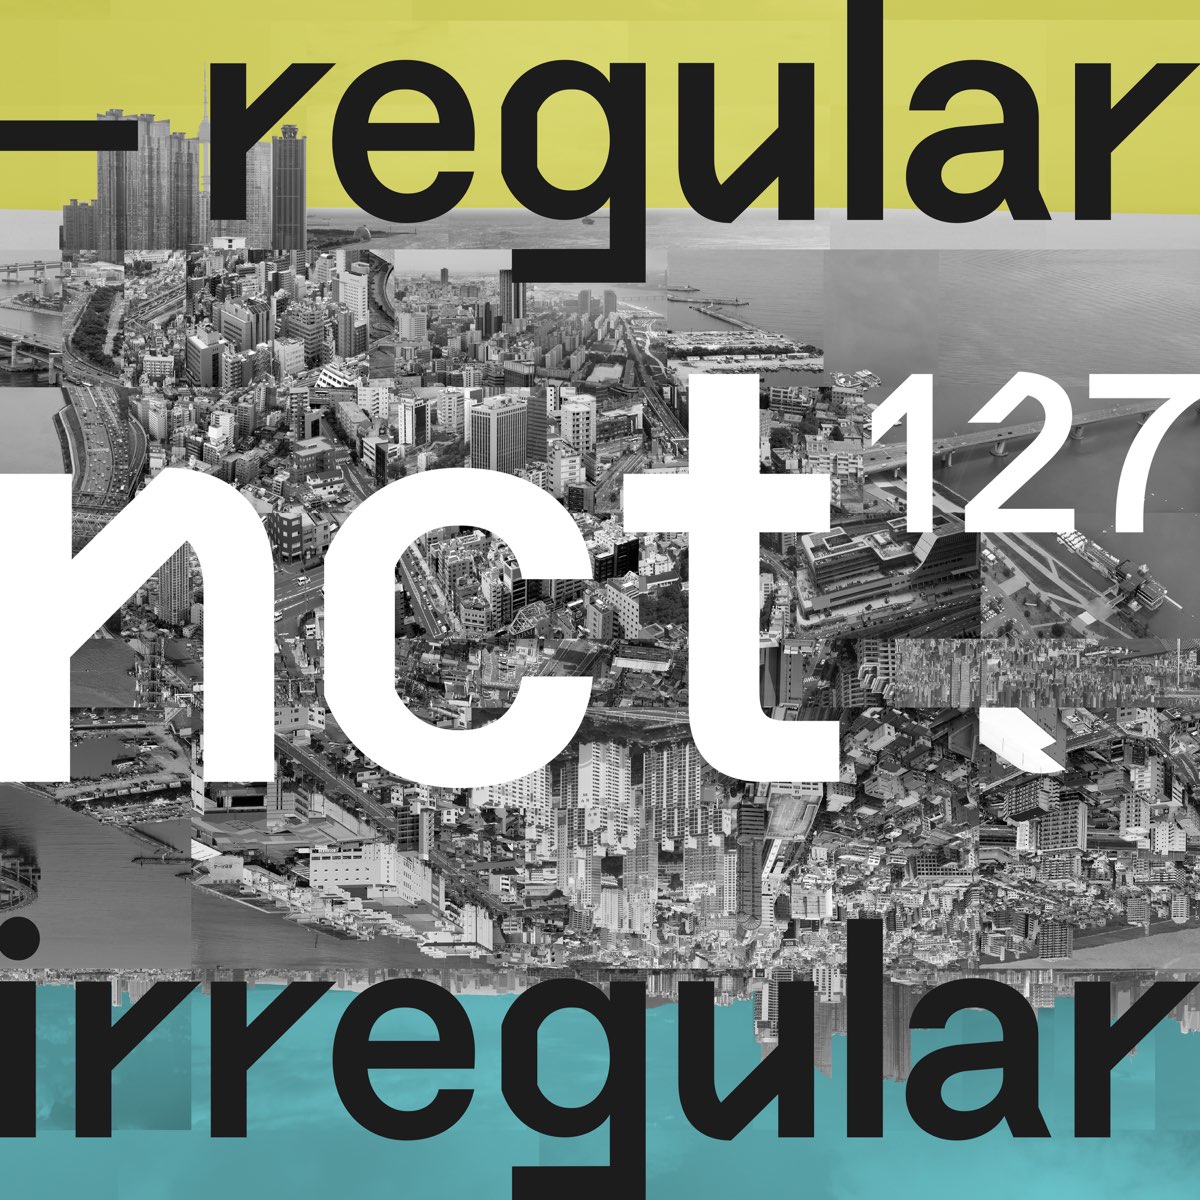 NCT 127 — Regular (English Version) cover artwork